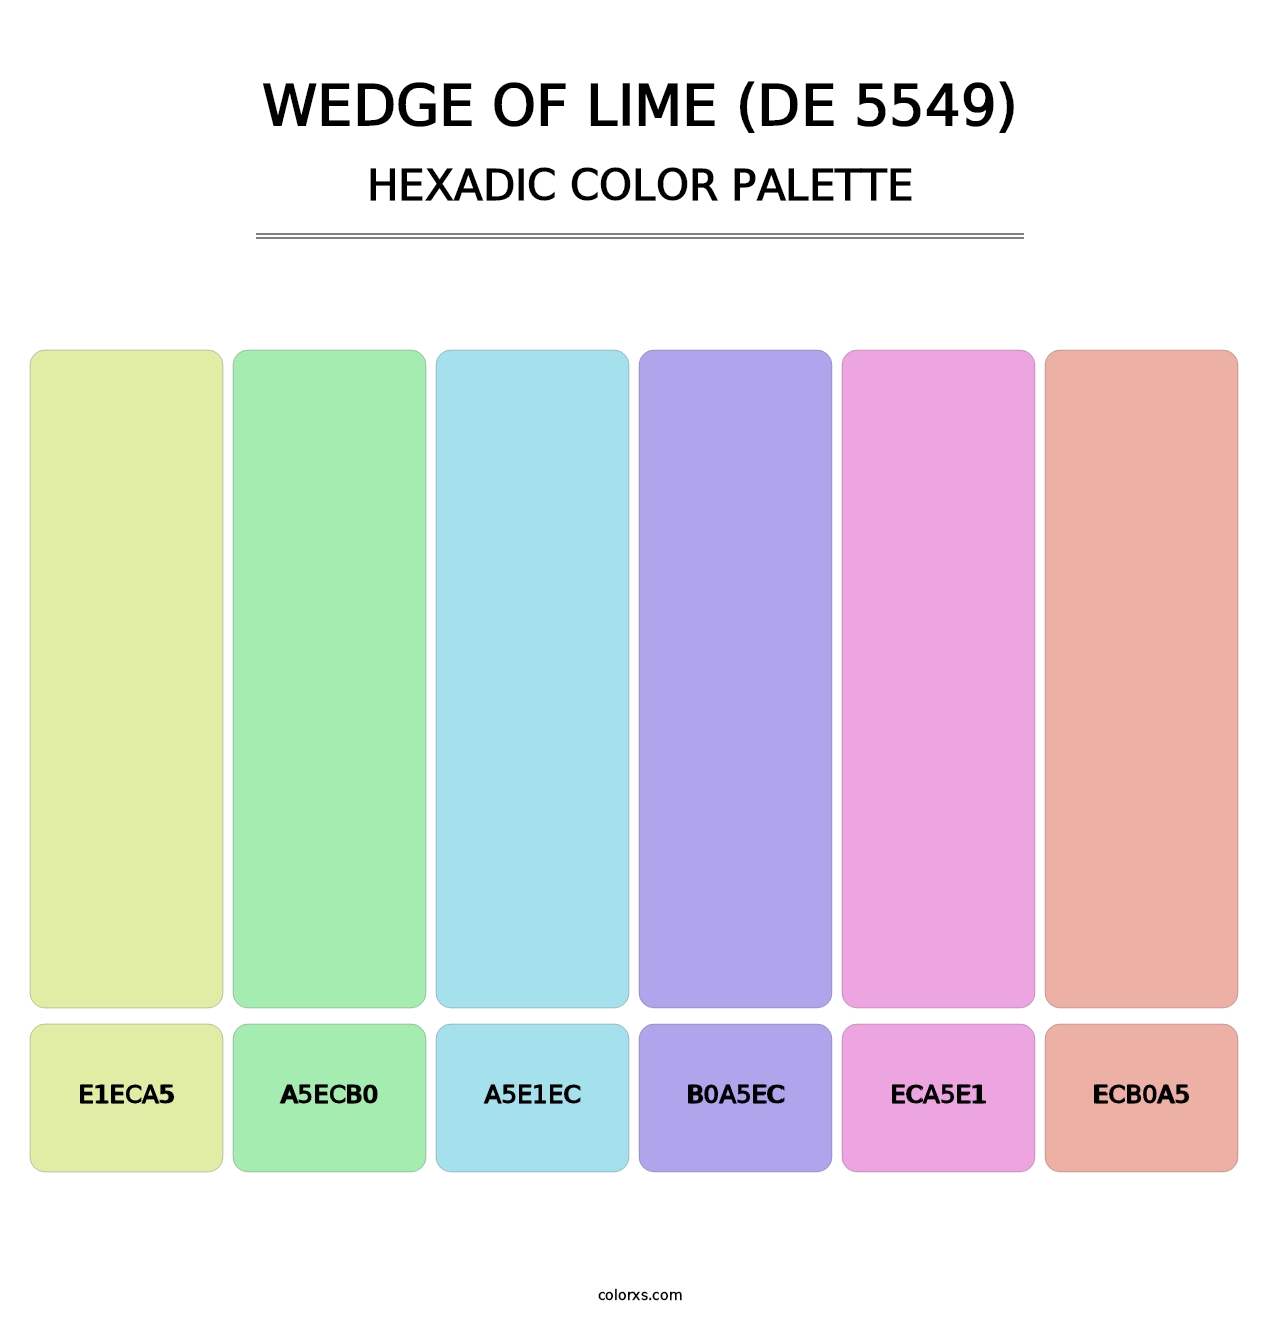 Wedge of Lime (DE 5549) - Hexadic Color Palette